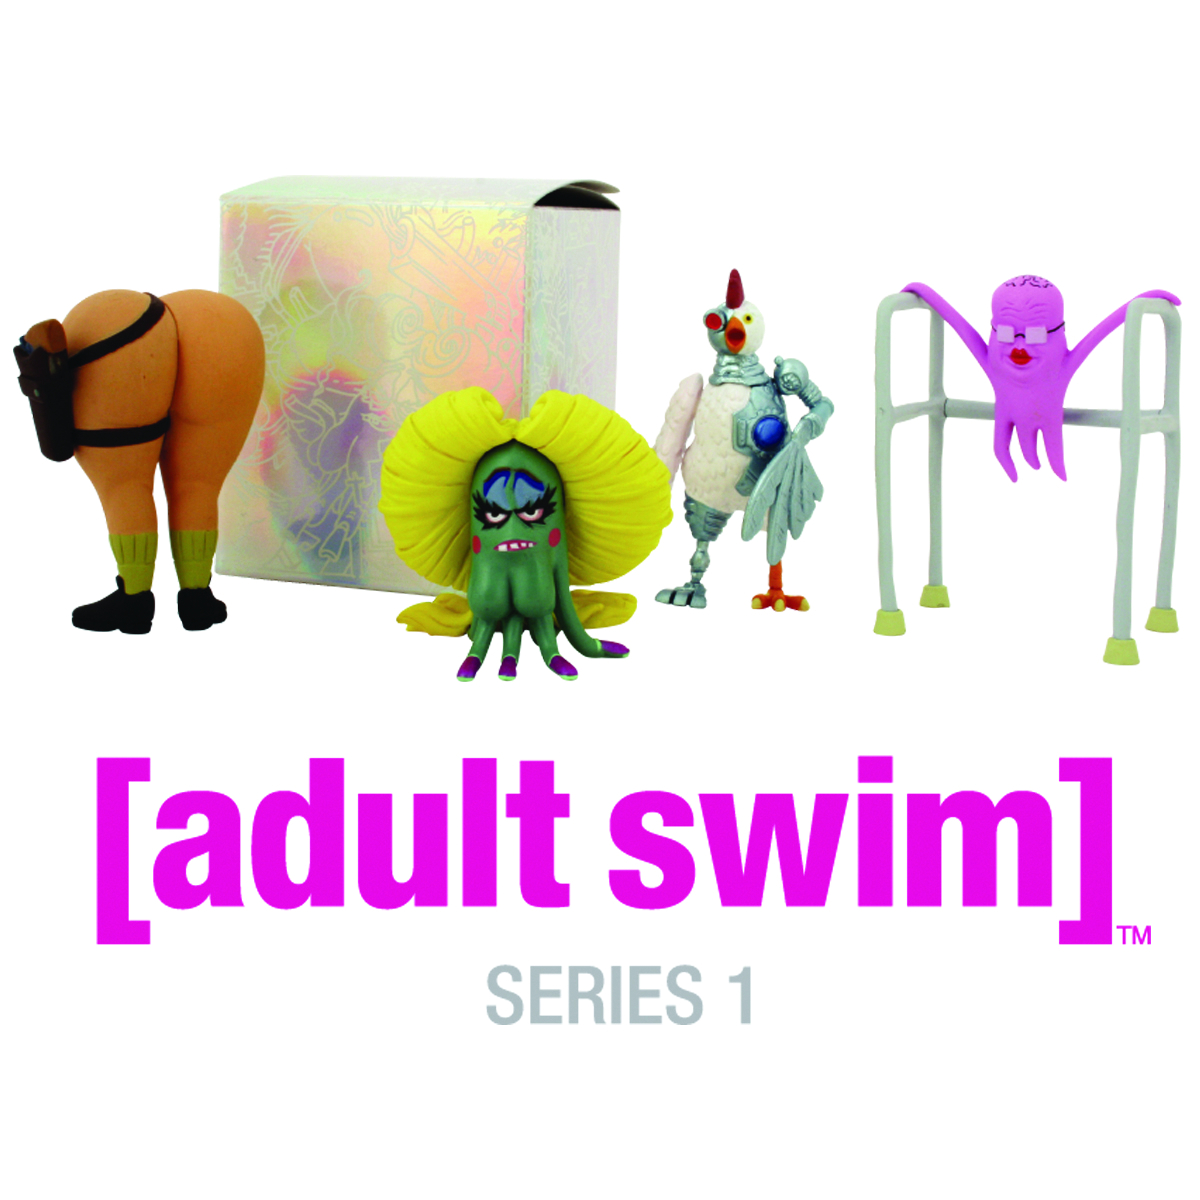 Carl Adult Swim Mini Series One Made by Kidrobot Brand New in Box 